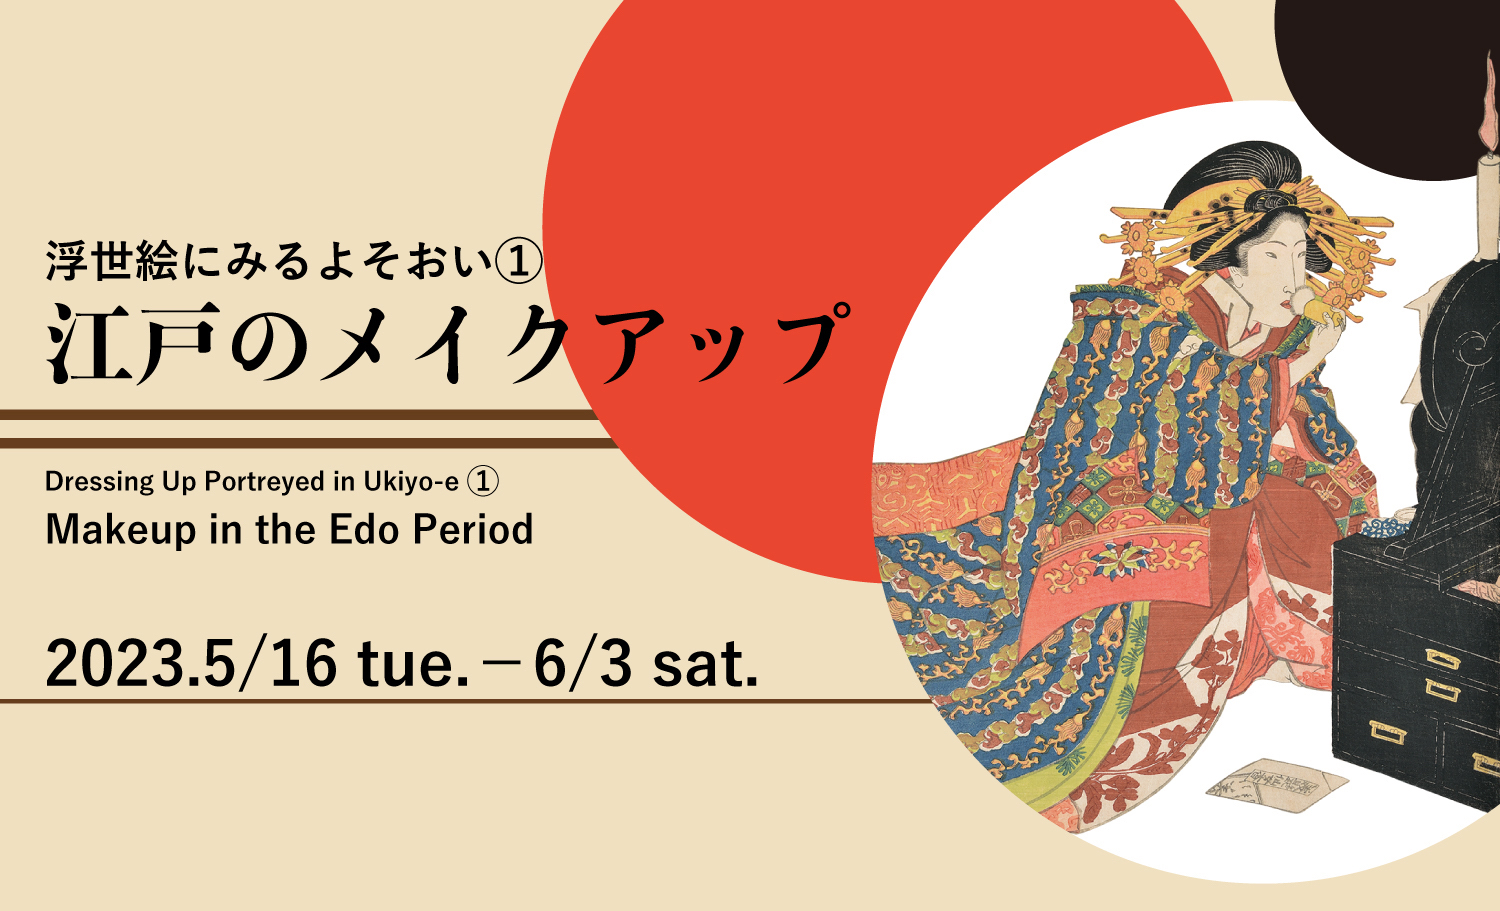 Dressing Up Portrayed in Ukiyo-e1　Makeup in the Edo Period